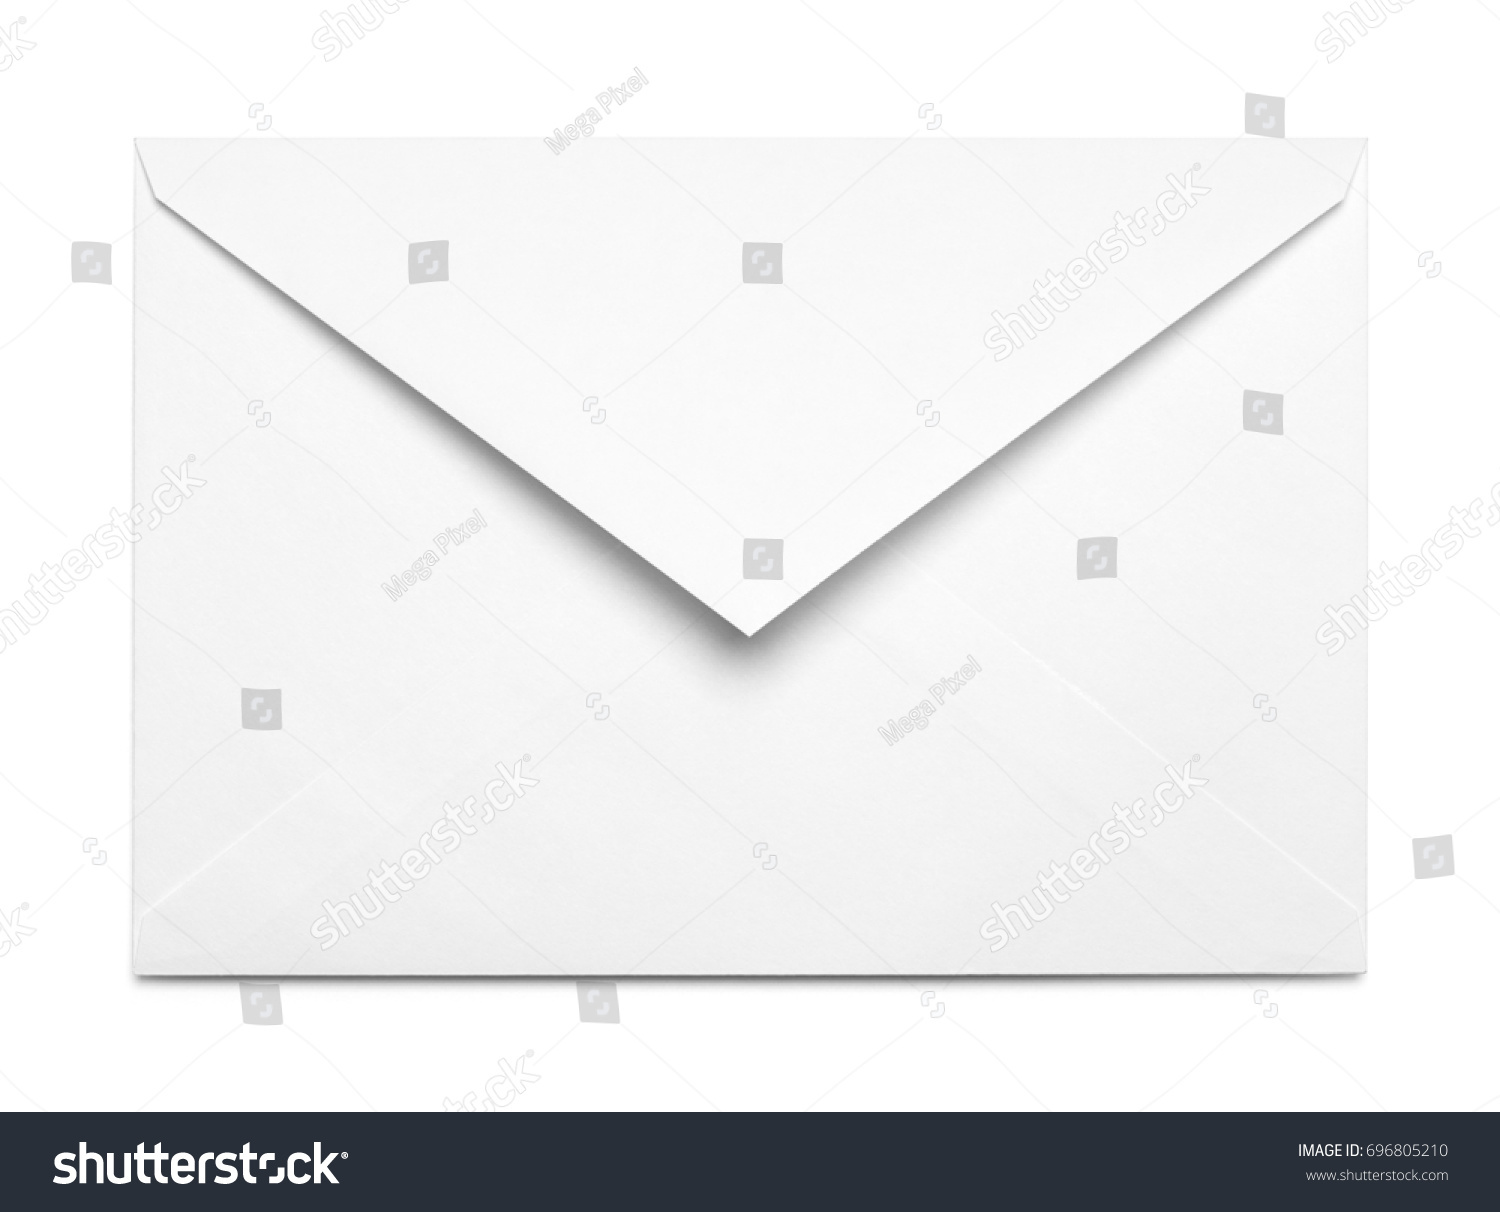 White Open Envelope Isolated on White Background. #696805210